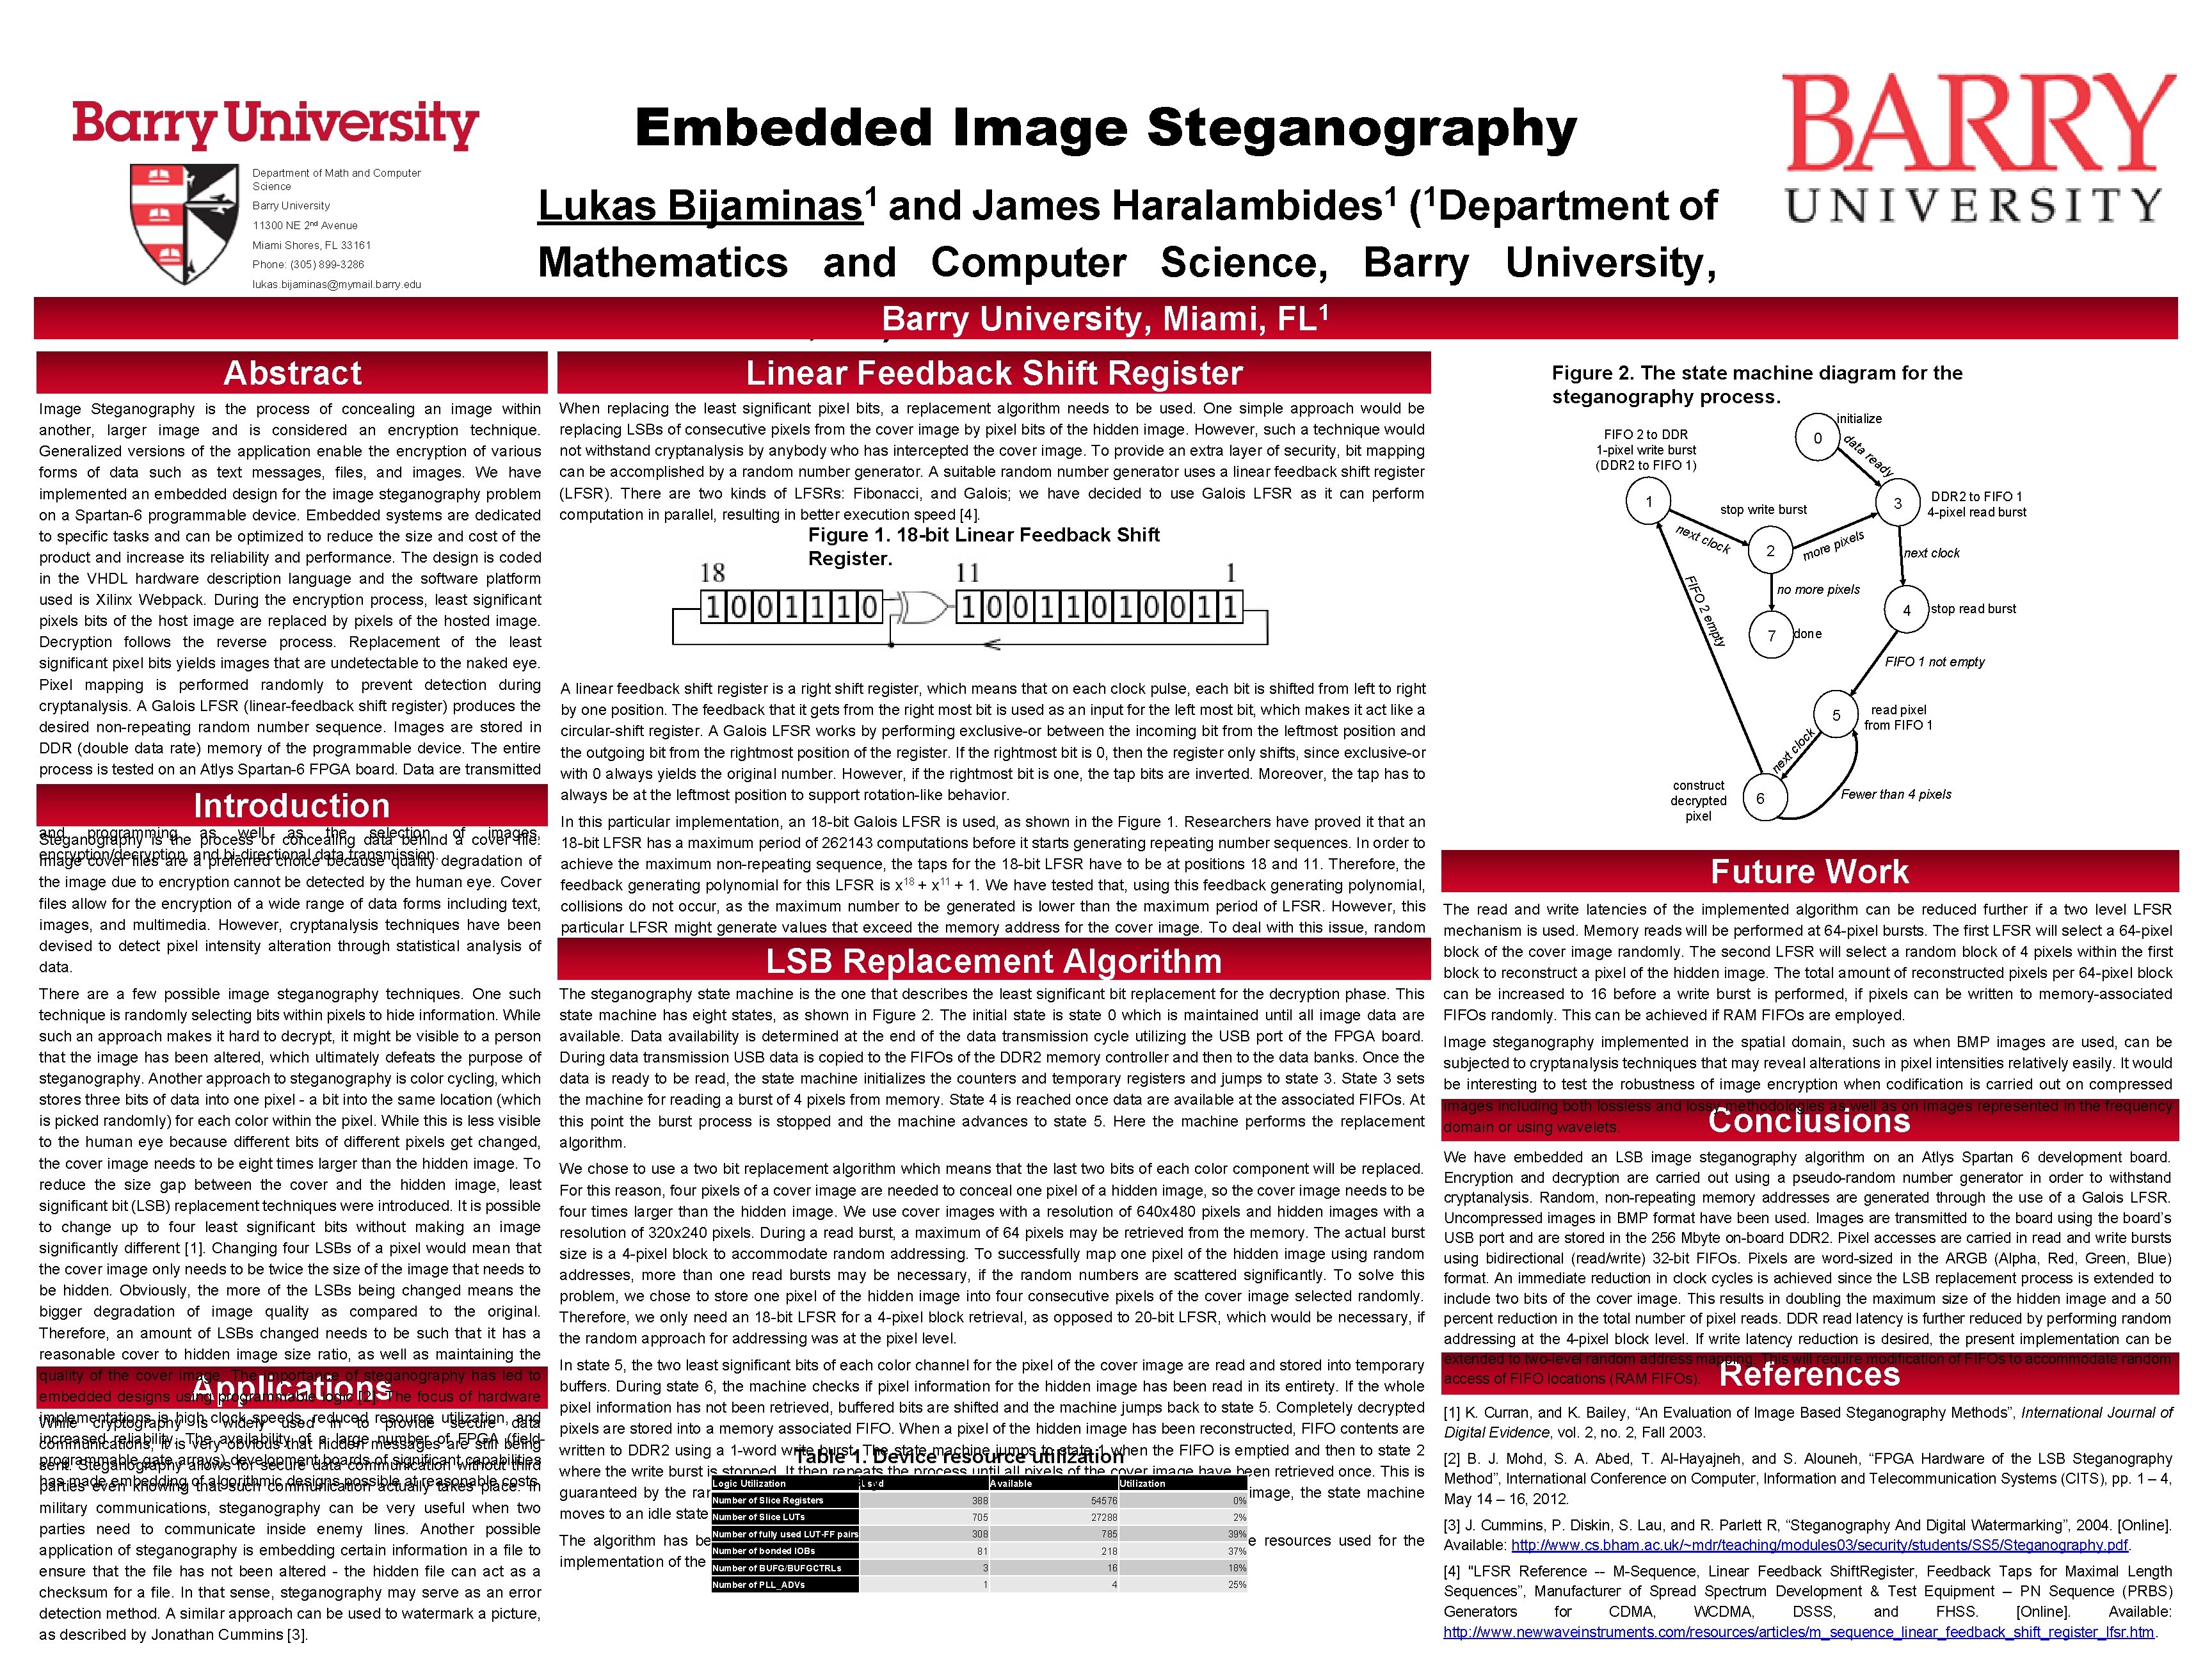 Embedded Image Steganography Phone: (305) 899 -3286 lukas. bijaminas@mymail. barry. edu Abstract Linear Feedback